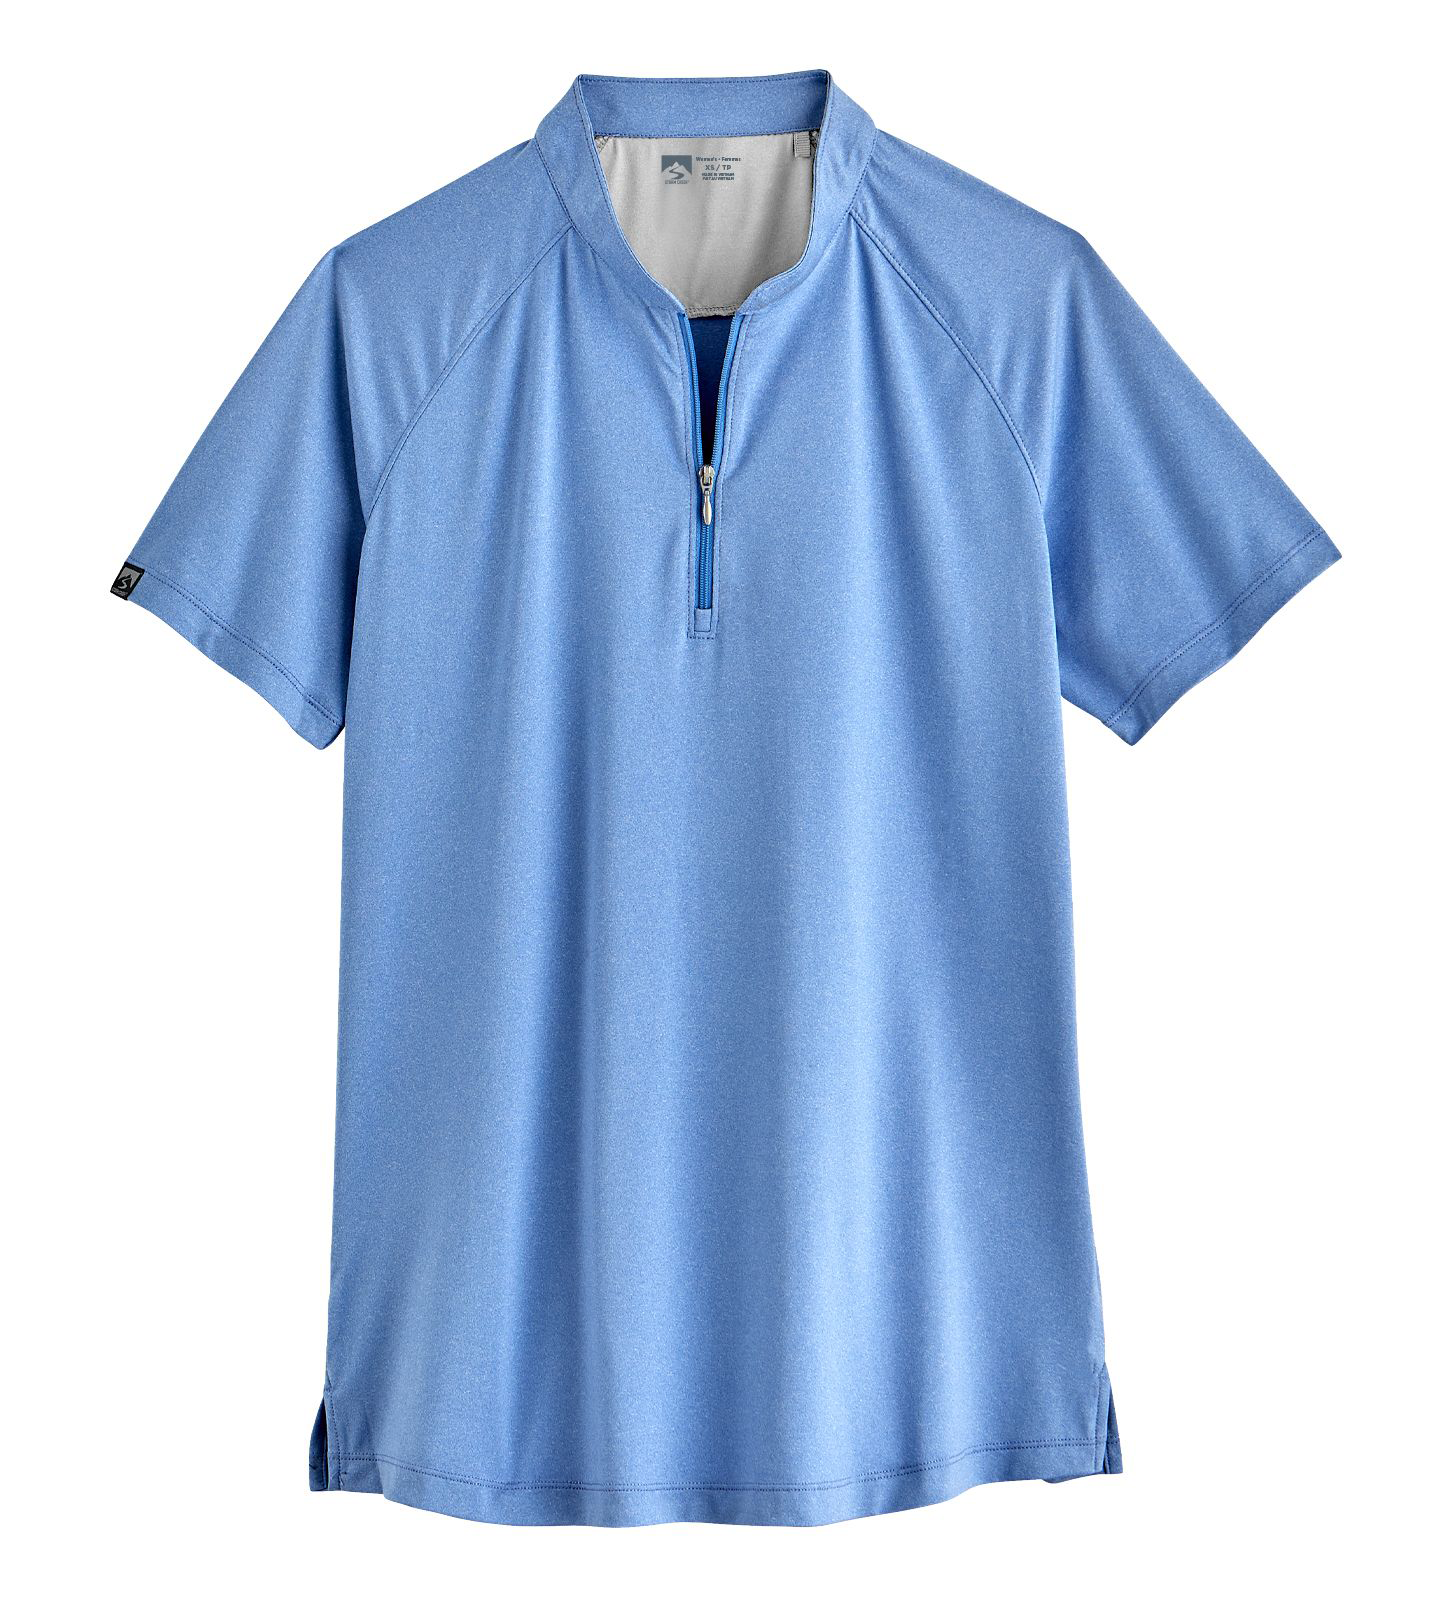 Storm Creek Visionary Polo Short-Sleeve Shirt for Ladies - Peri Blue - S